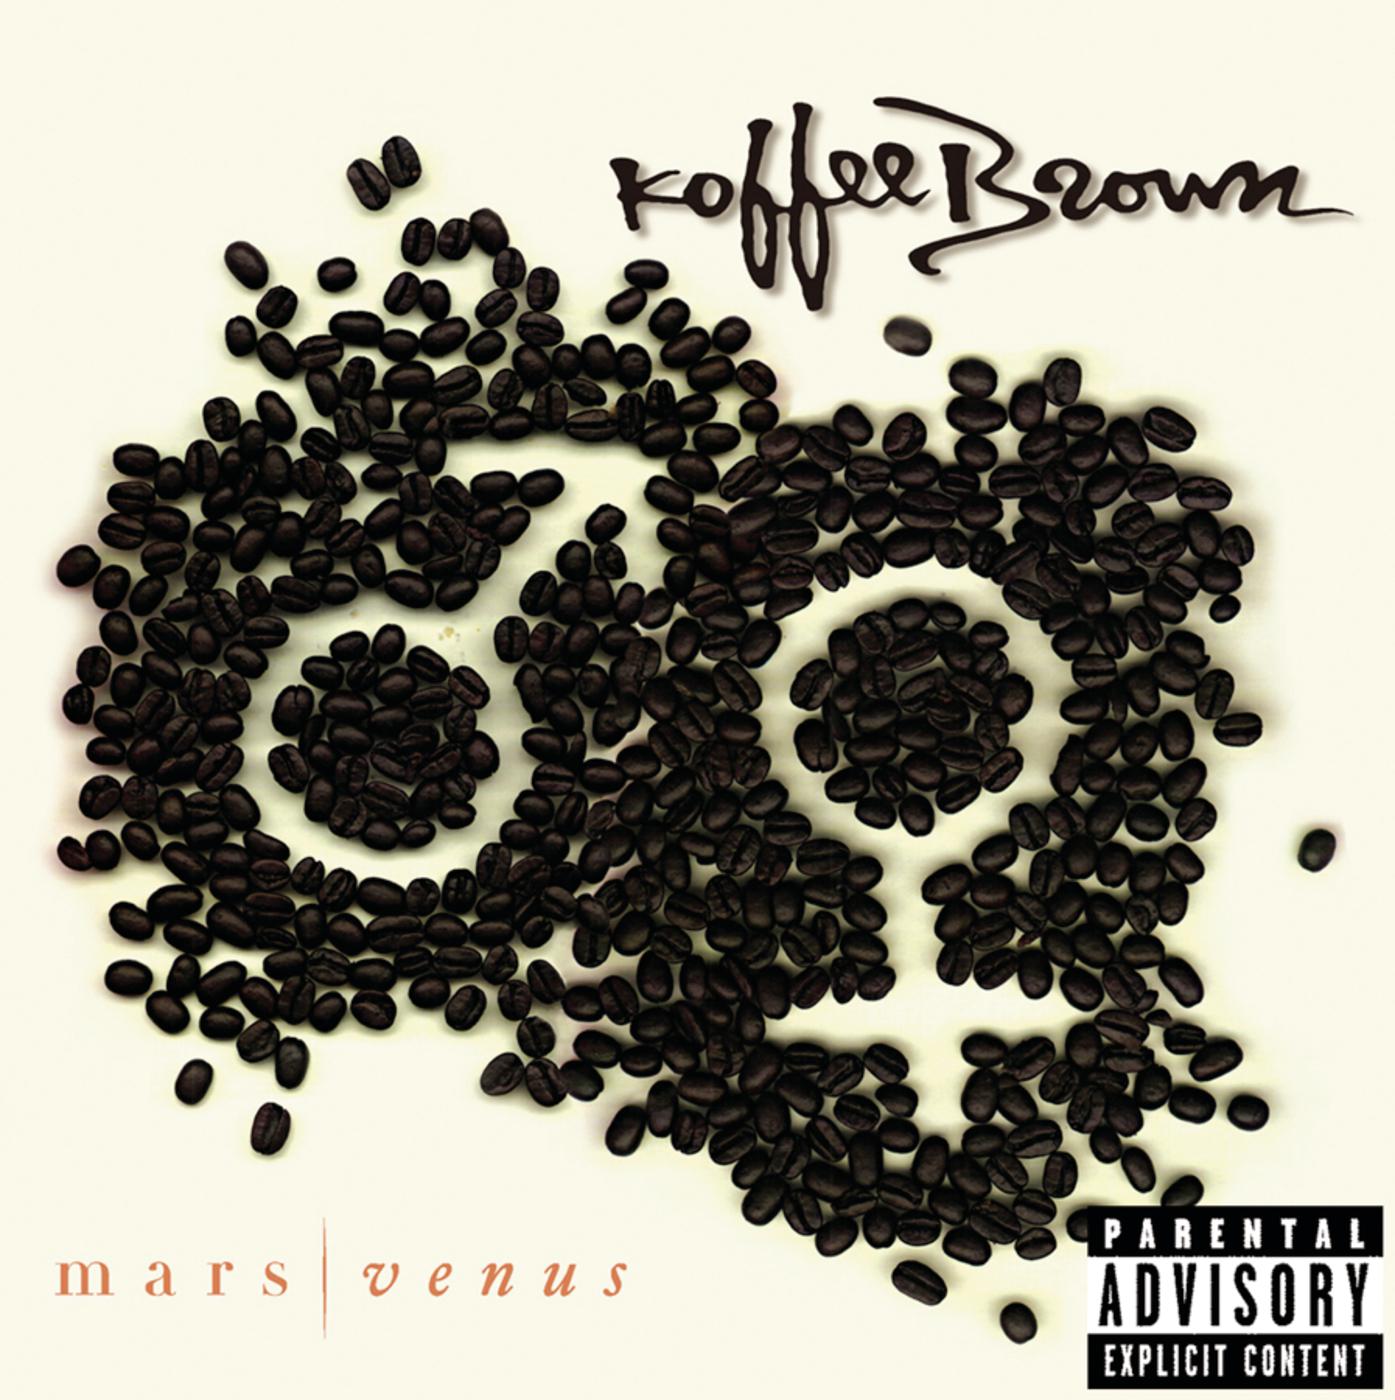 Koffee Brown - Mars/Venus (Interlude)